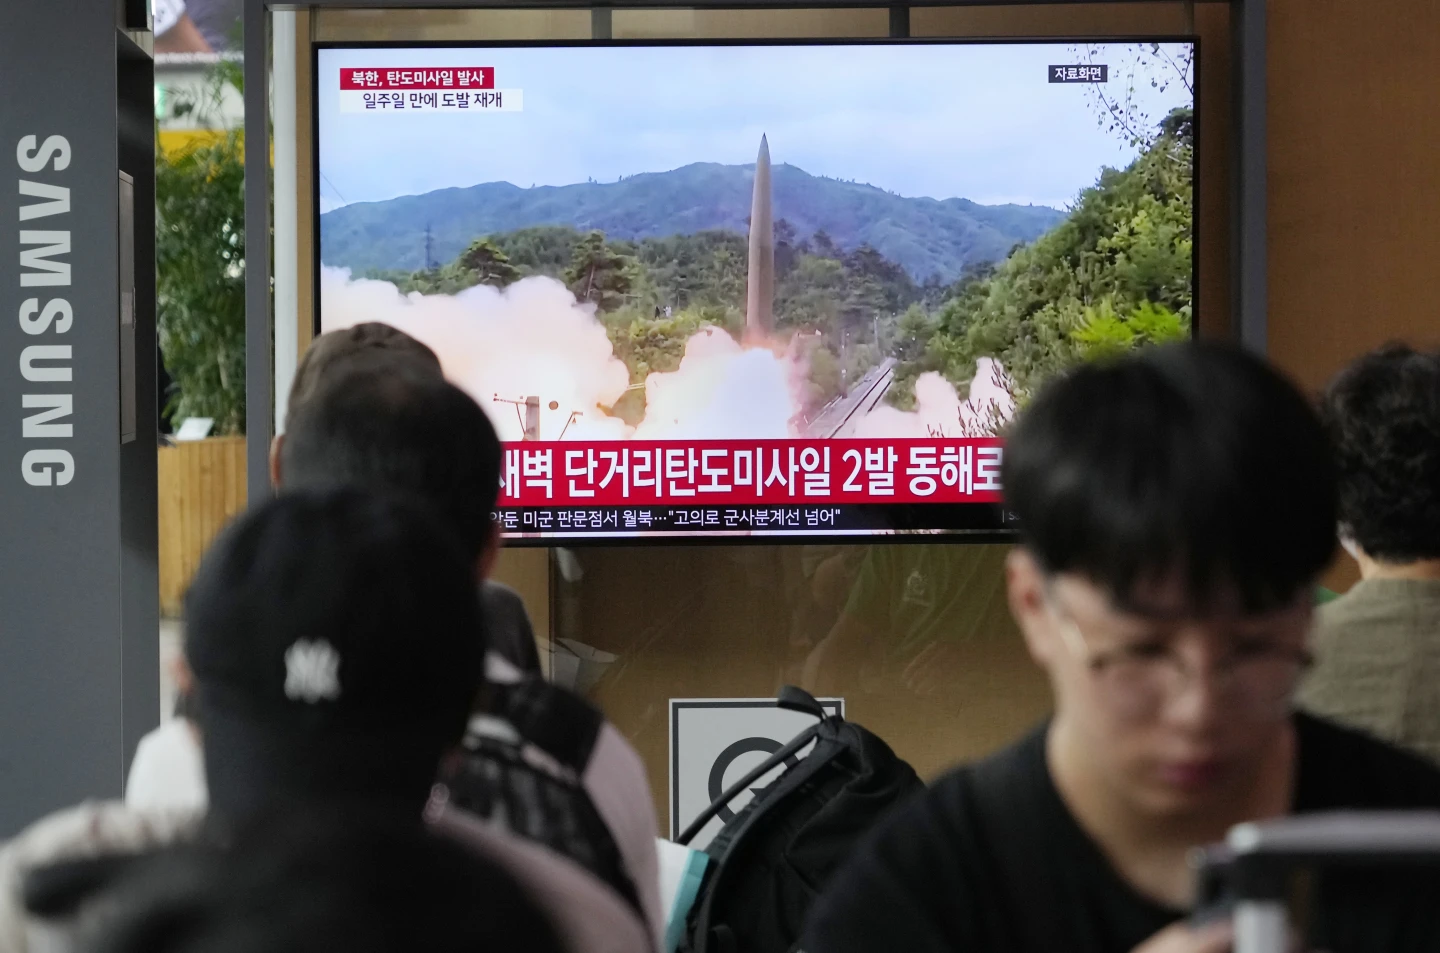 North Korea fires 2 short-range missiles into the sea as US docks nuclear submarine in South Korea (apnews.com)